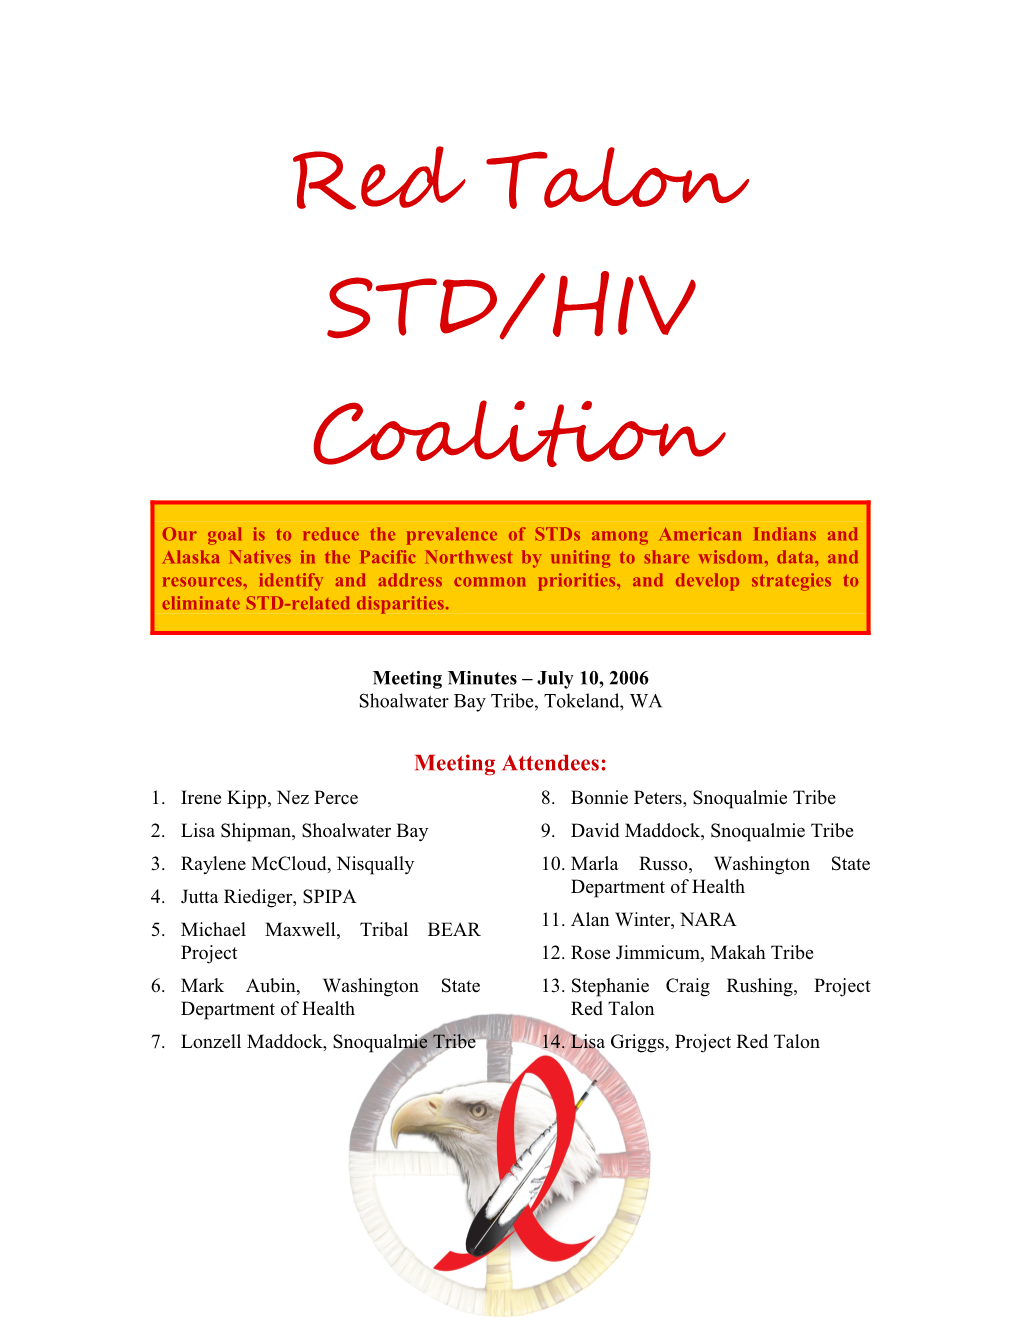 Red Talon STD/HIV Coalition